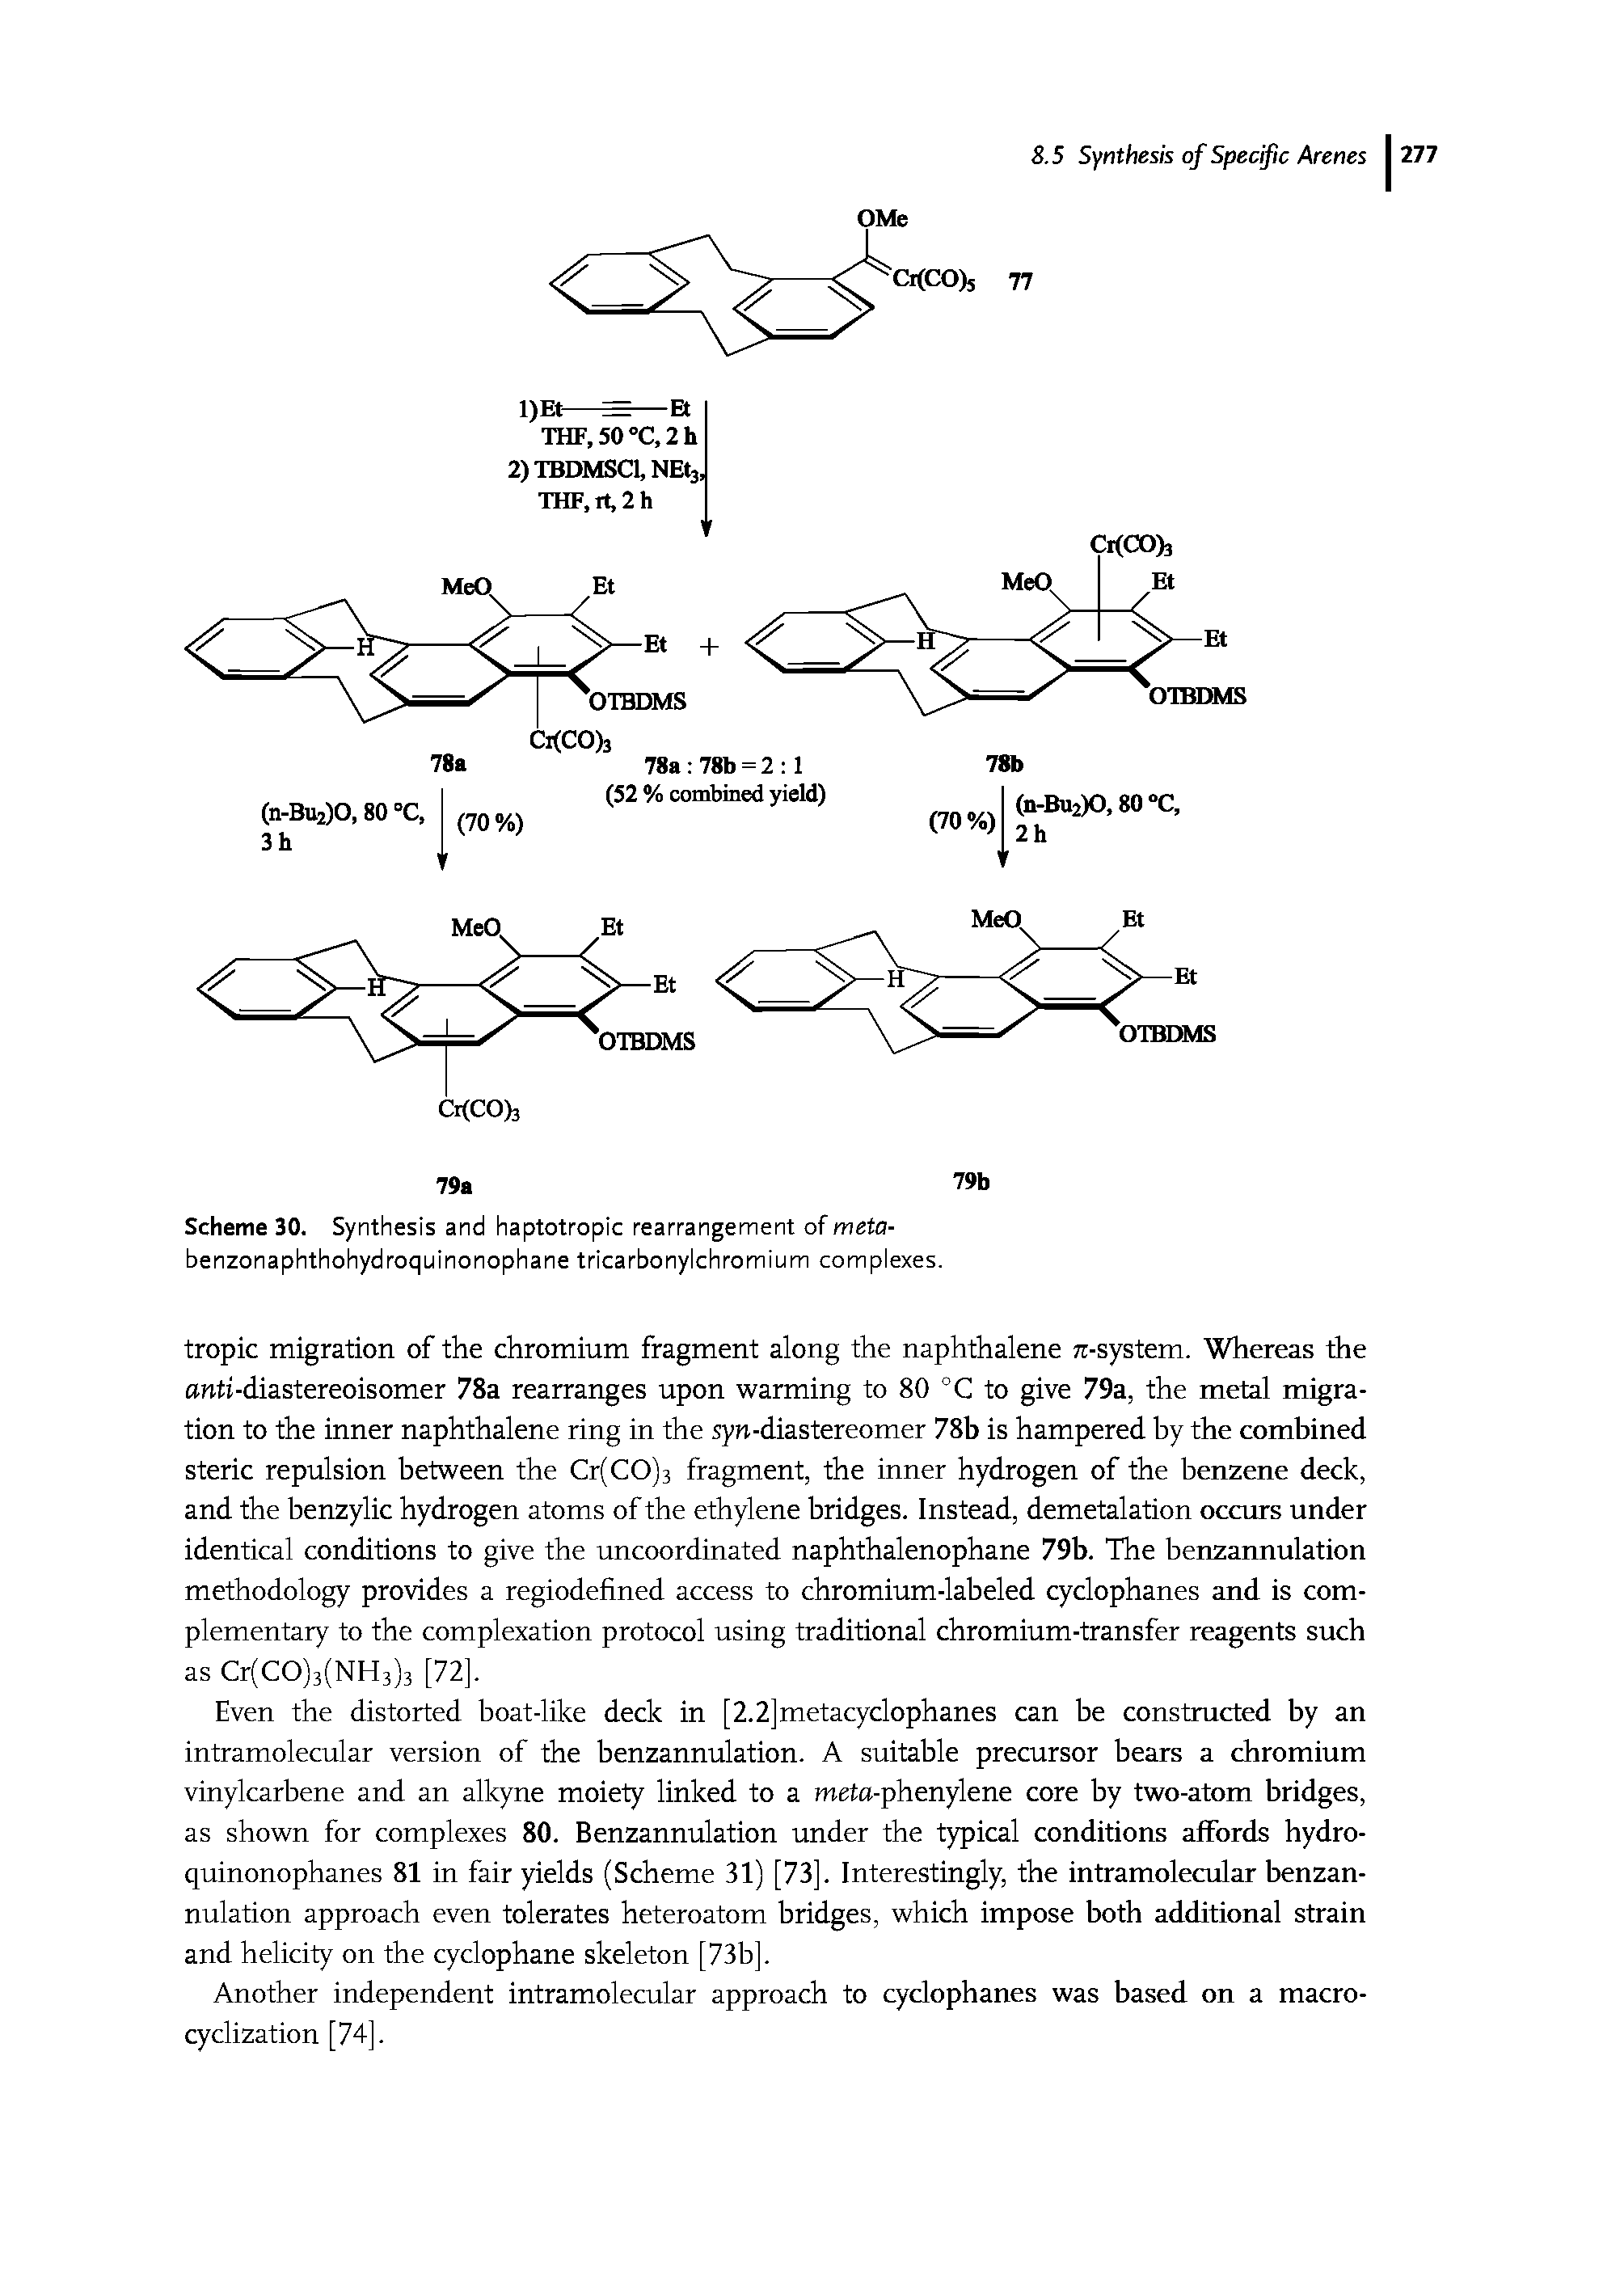 Scheme 30. Synthesis and haptotropic rearrangement of meta-benzonaphthohydroquinonophane tricarbonylchromium complexes.